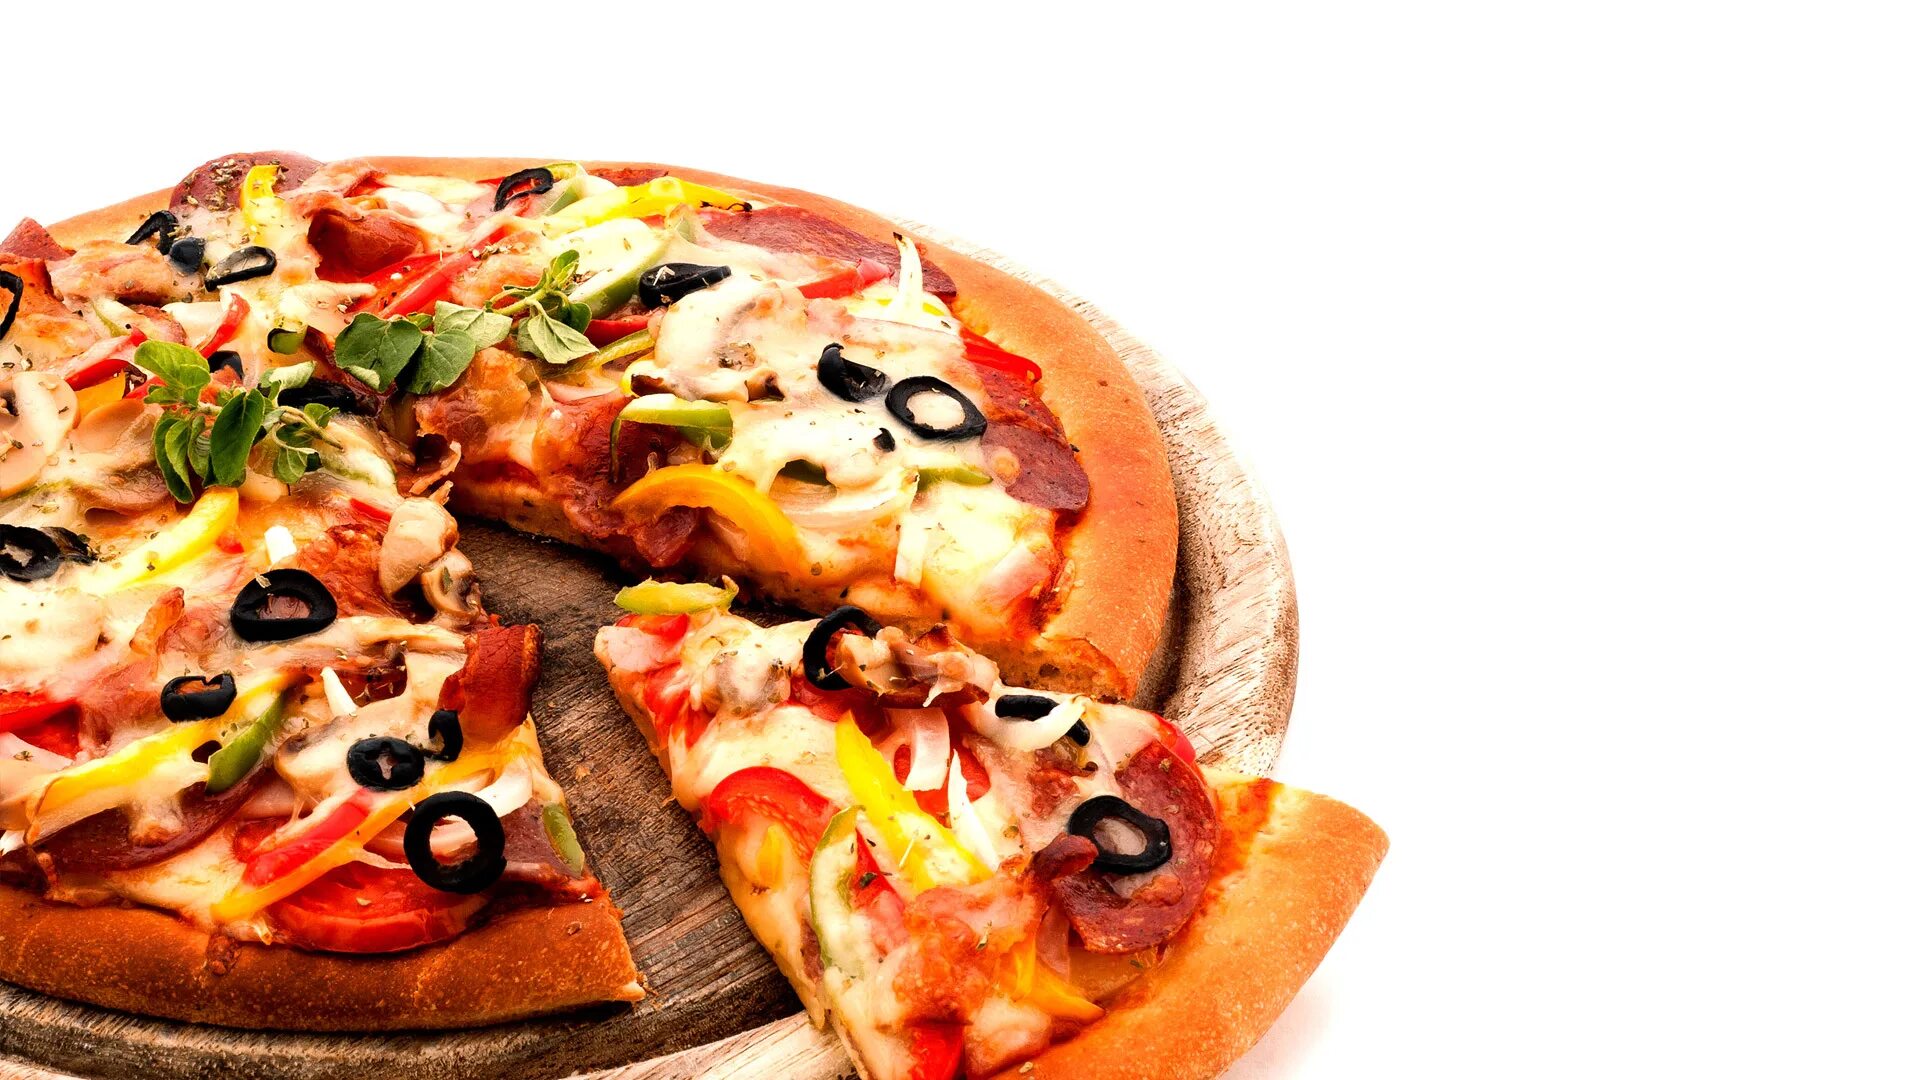 Така пицца. "Пицца". Кусок пиццы. Самая красивая пицца. Пицца на белом фоне.